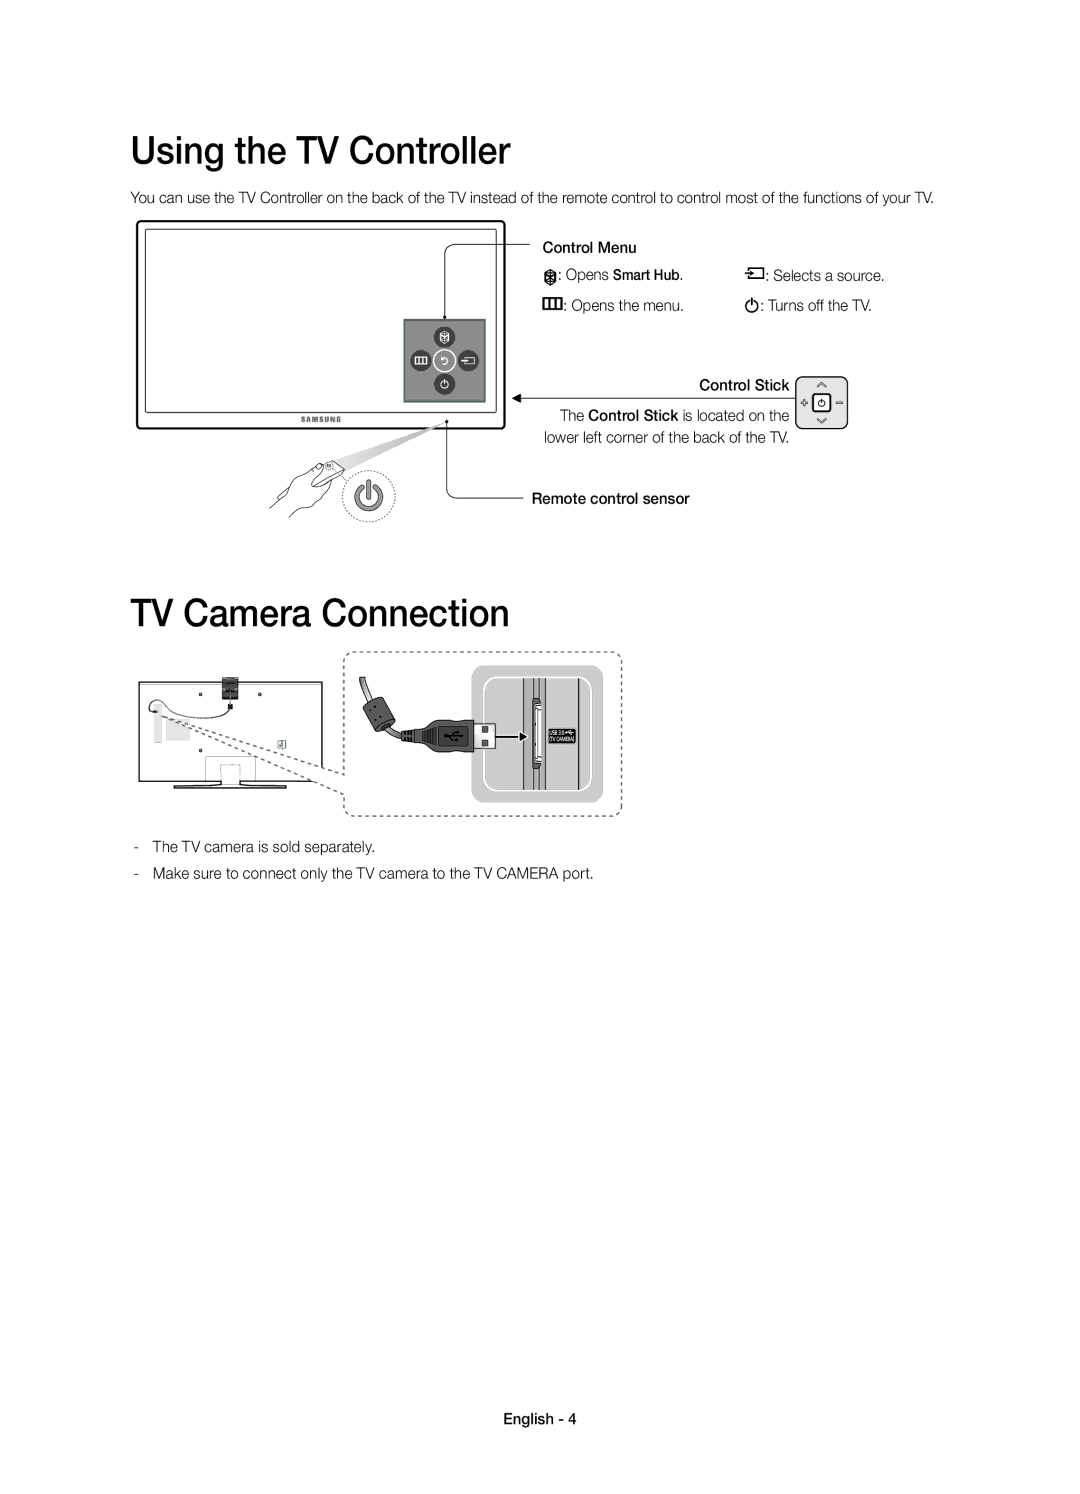 Samsung UE65JU7505TXXE, UE78JU7505TXXE Using the TV Controller, TV Camera Connection, Control Stick, Remote control sensor 